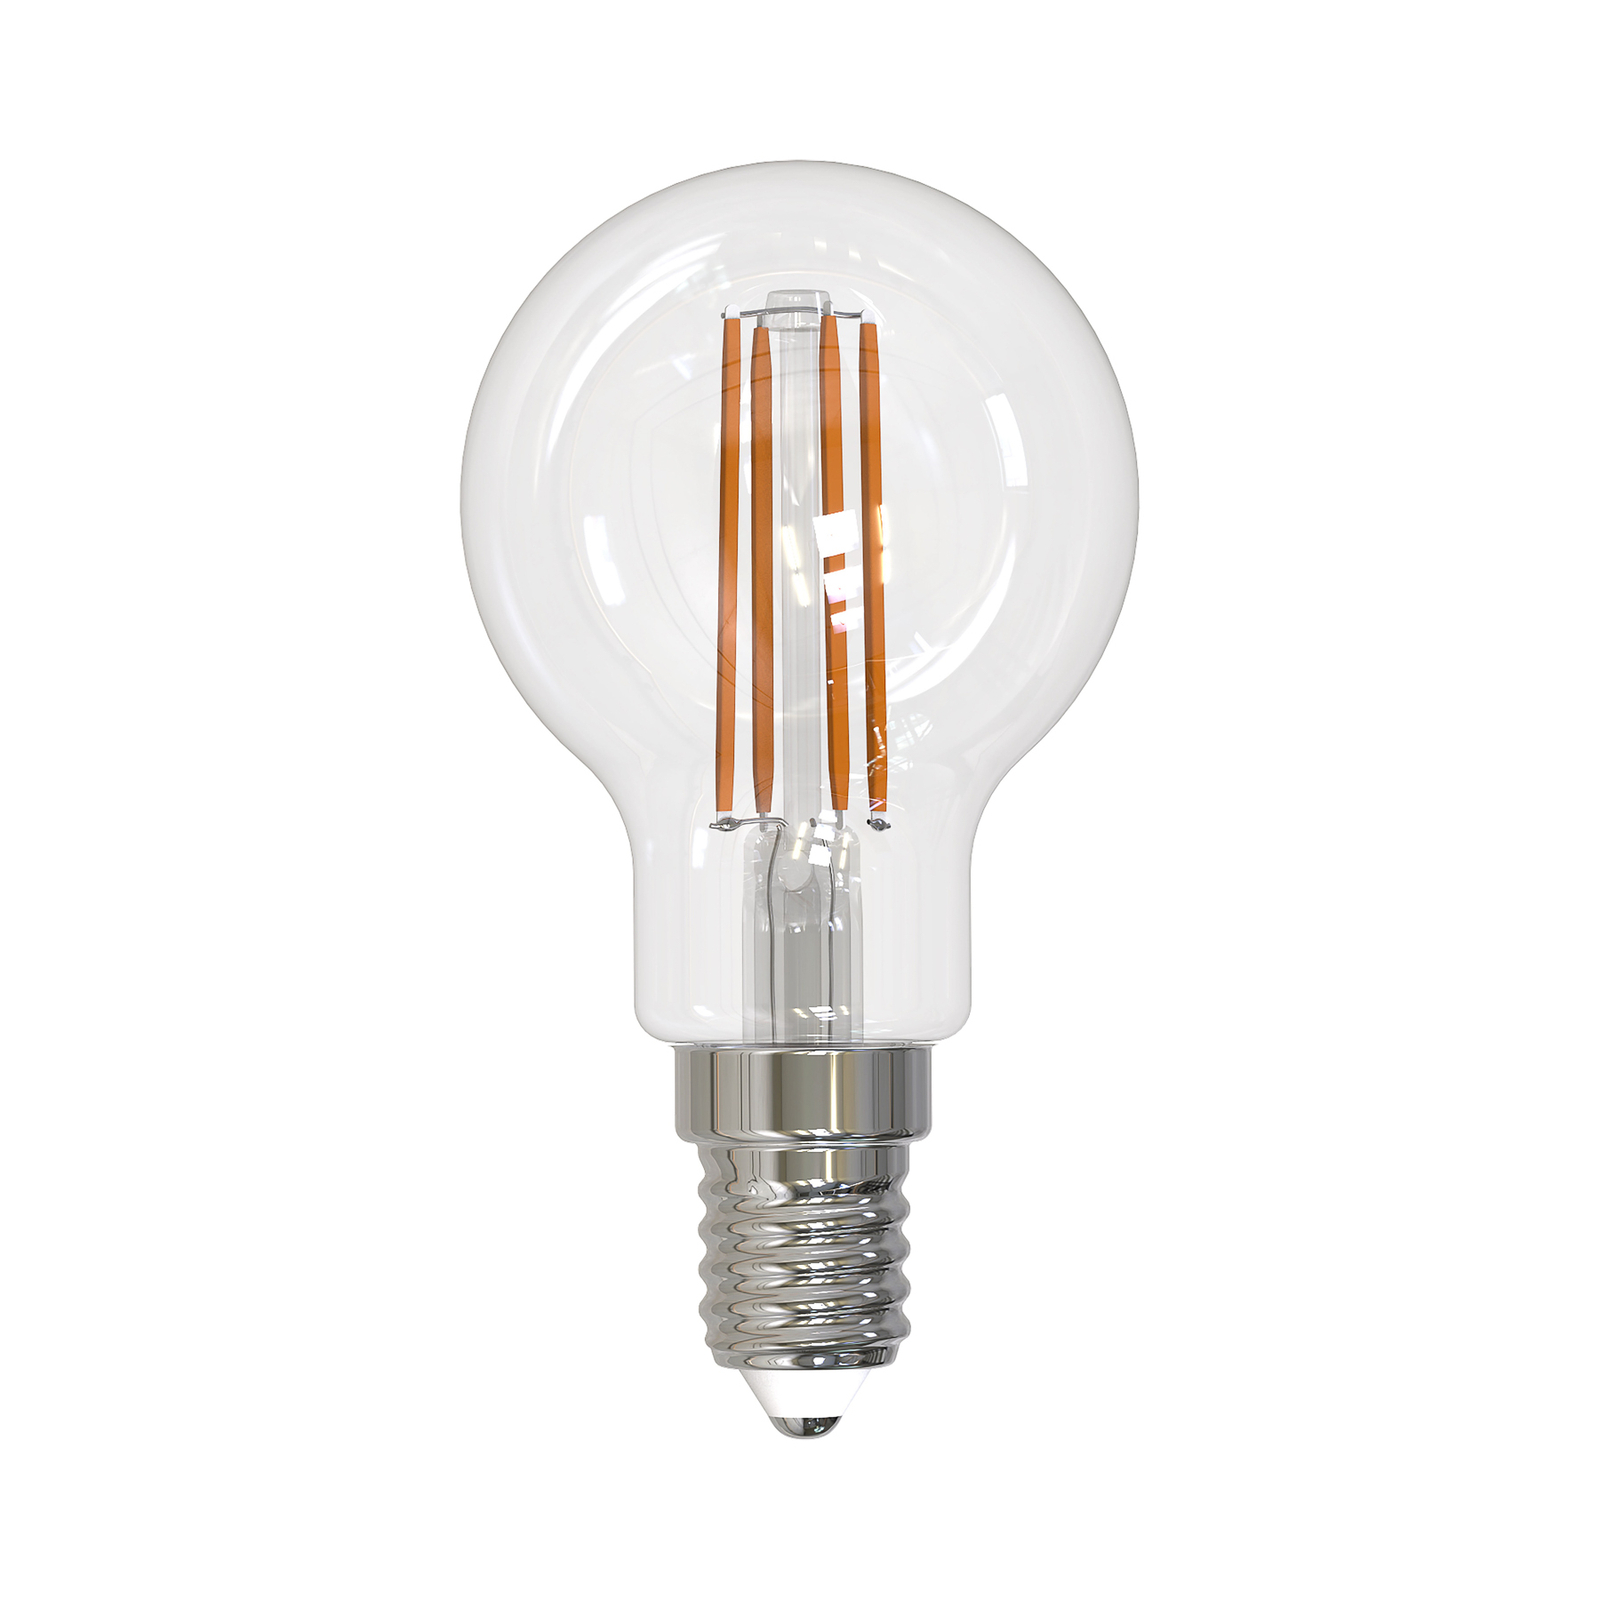 Arcchio LED-Leuchtmittel Filament E14 G45, 3er-Set, 2700 K